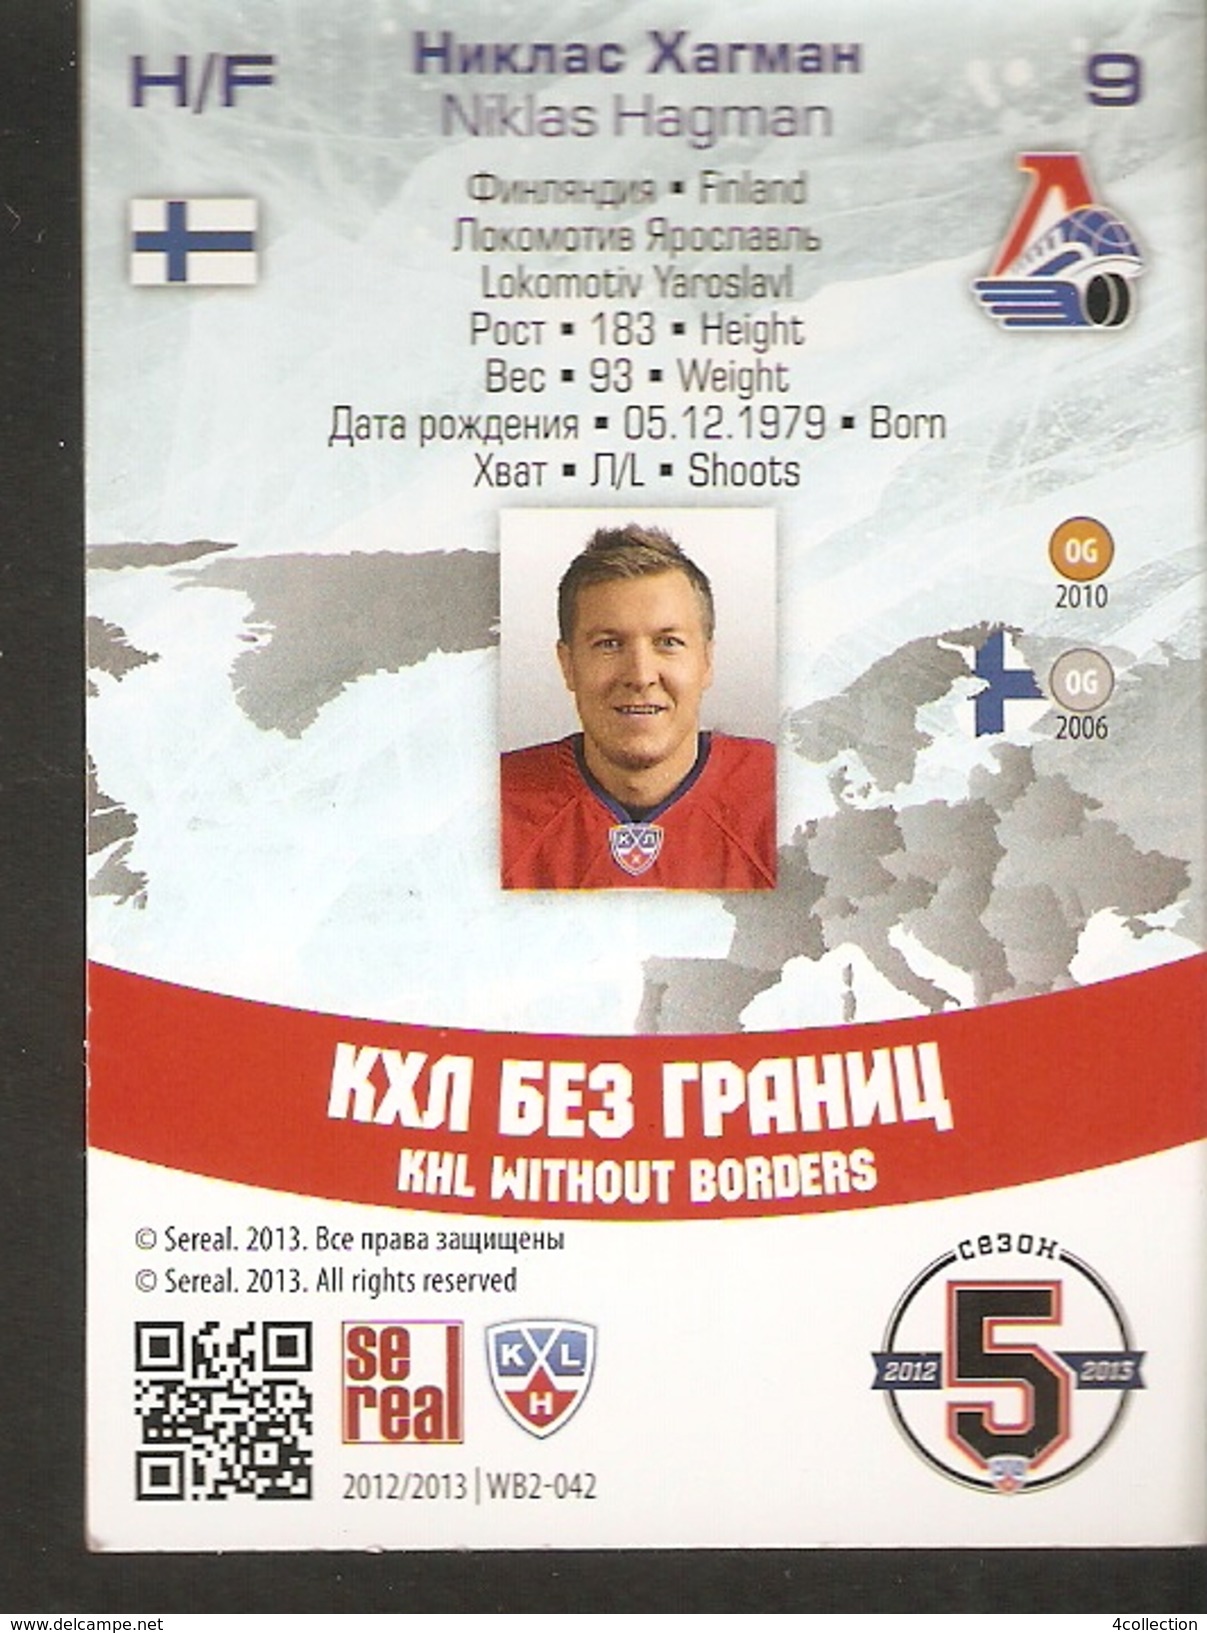 Hockey Sport Collectibles KHL Se Real Card NIKLAS HAGMAN H/F #9 Finland LOKOMOTIV Yaroslavl 5th Season 2012-2013 - 2000-Nu